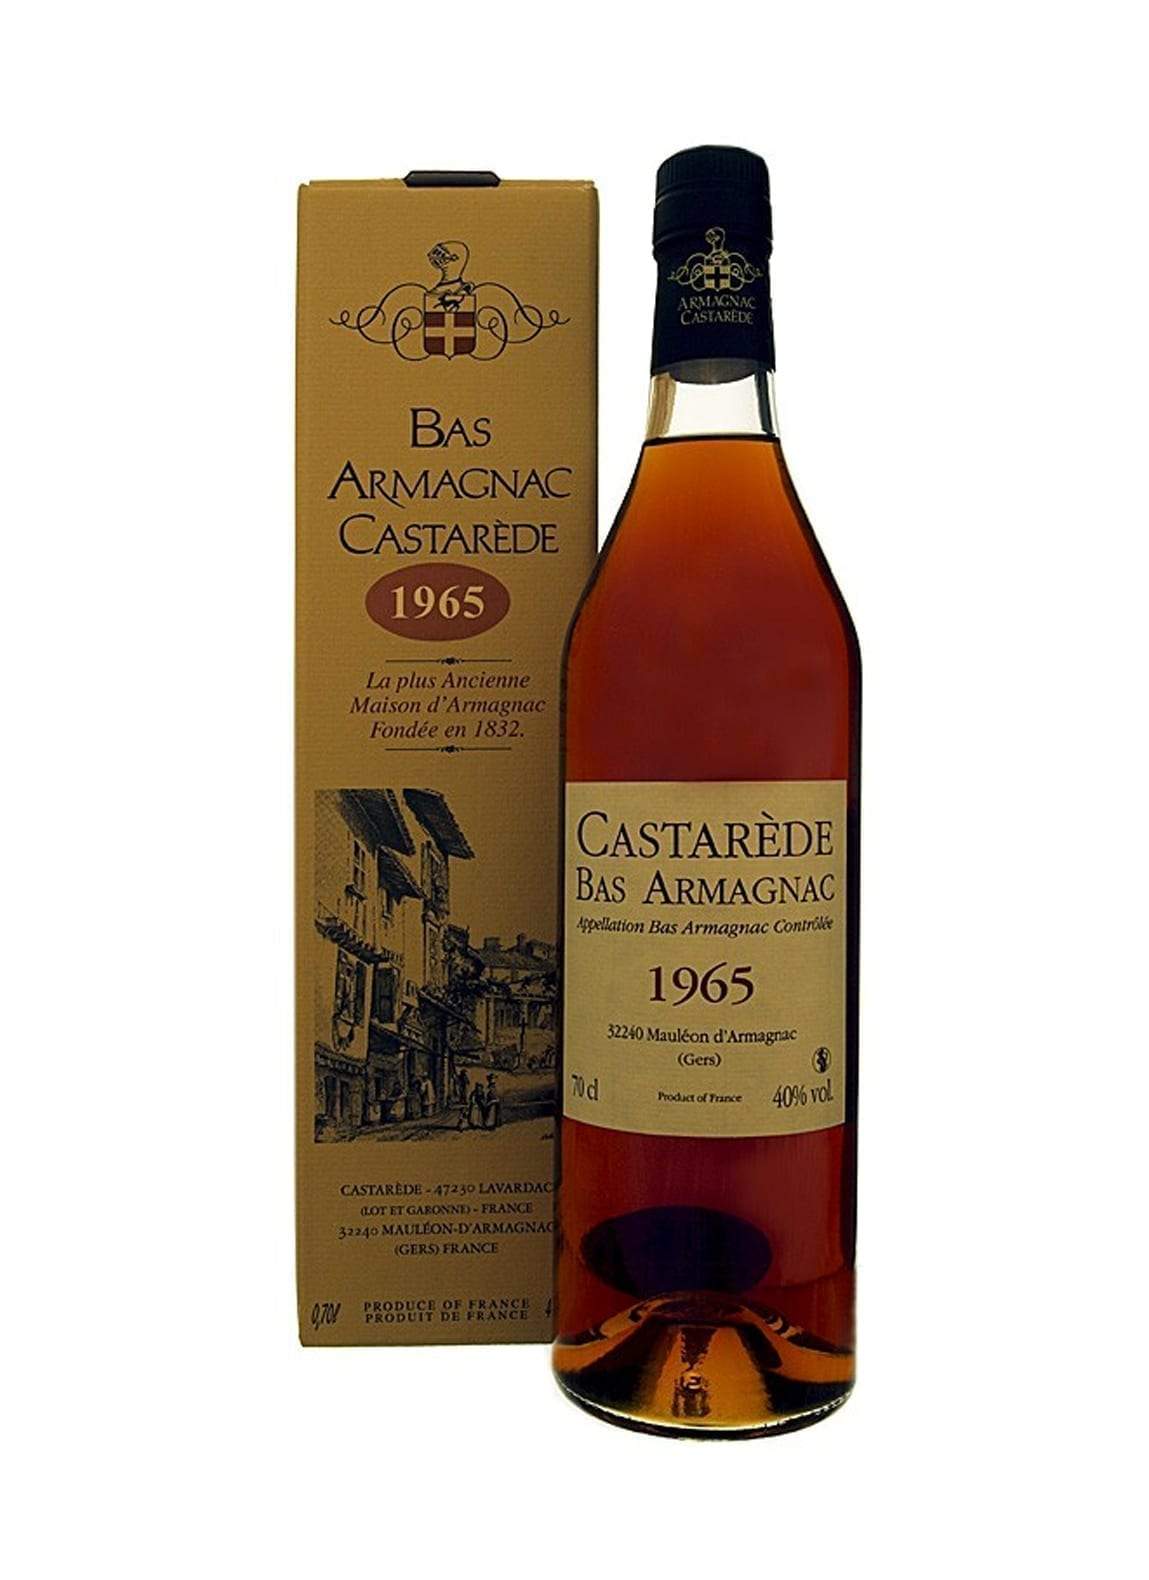 Castarede 1965 Bas Armagnac 40% 700ml | Brandy | Shop online at Spirits of France